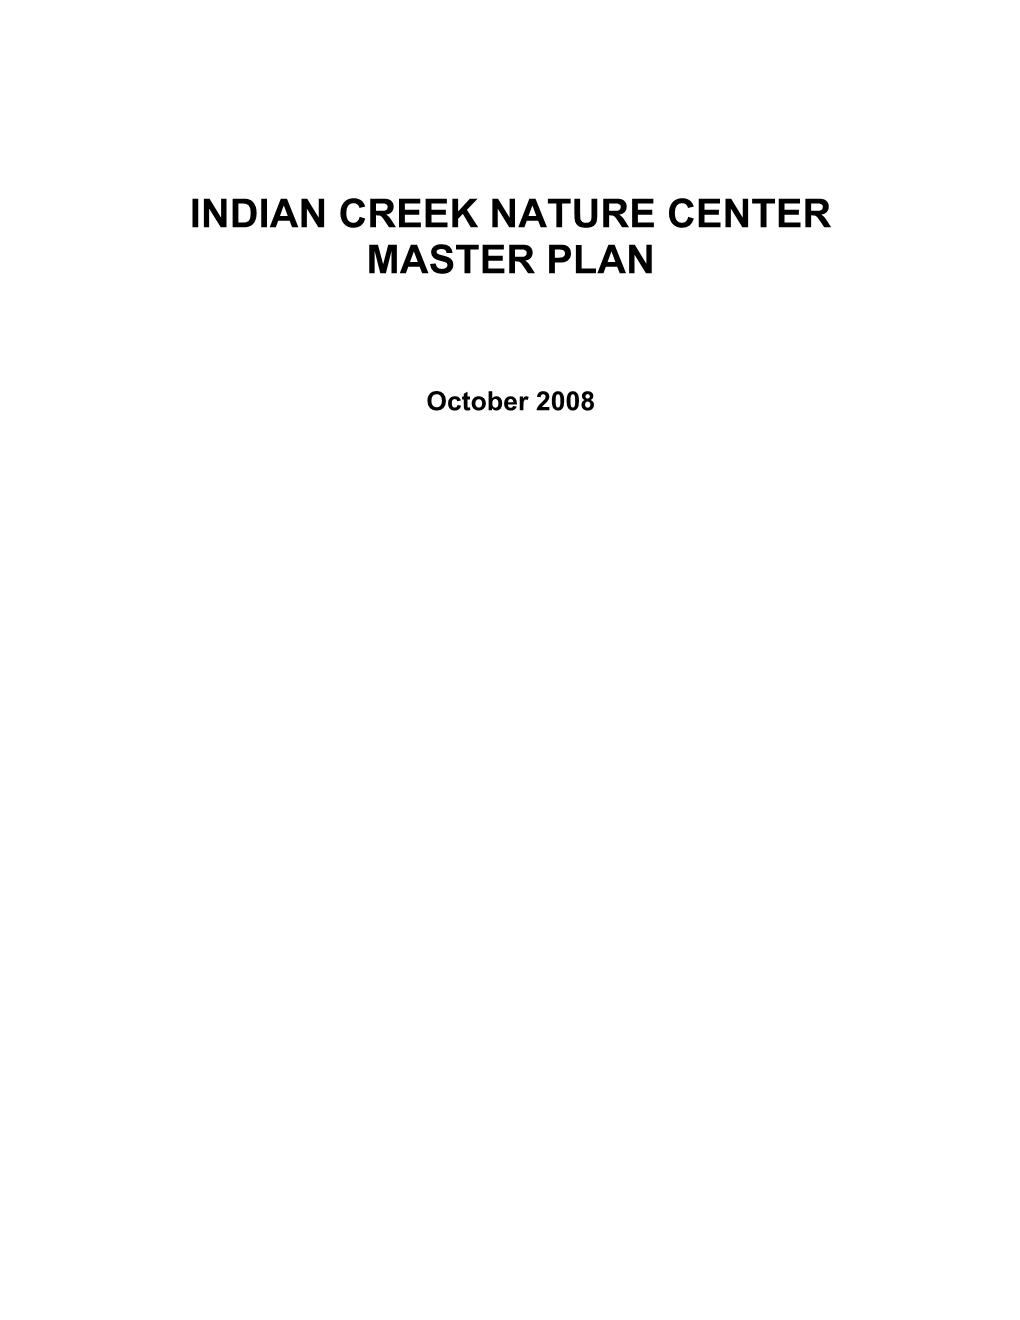 Indian Creek Nature Center Master Plan